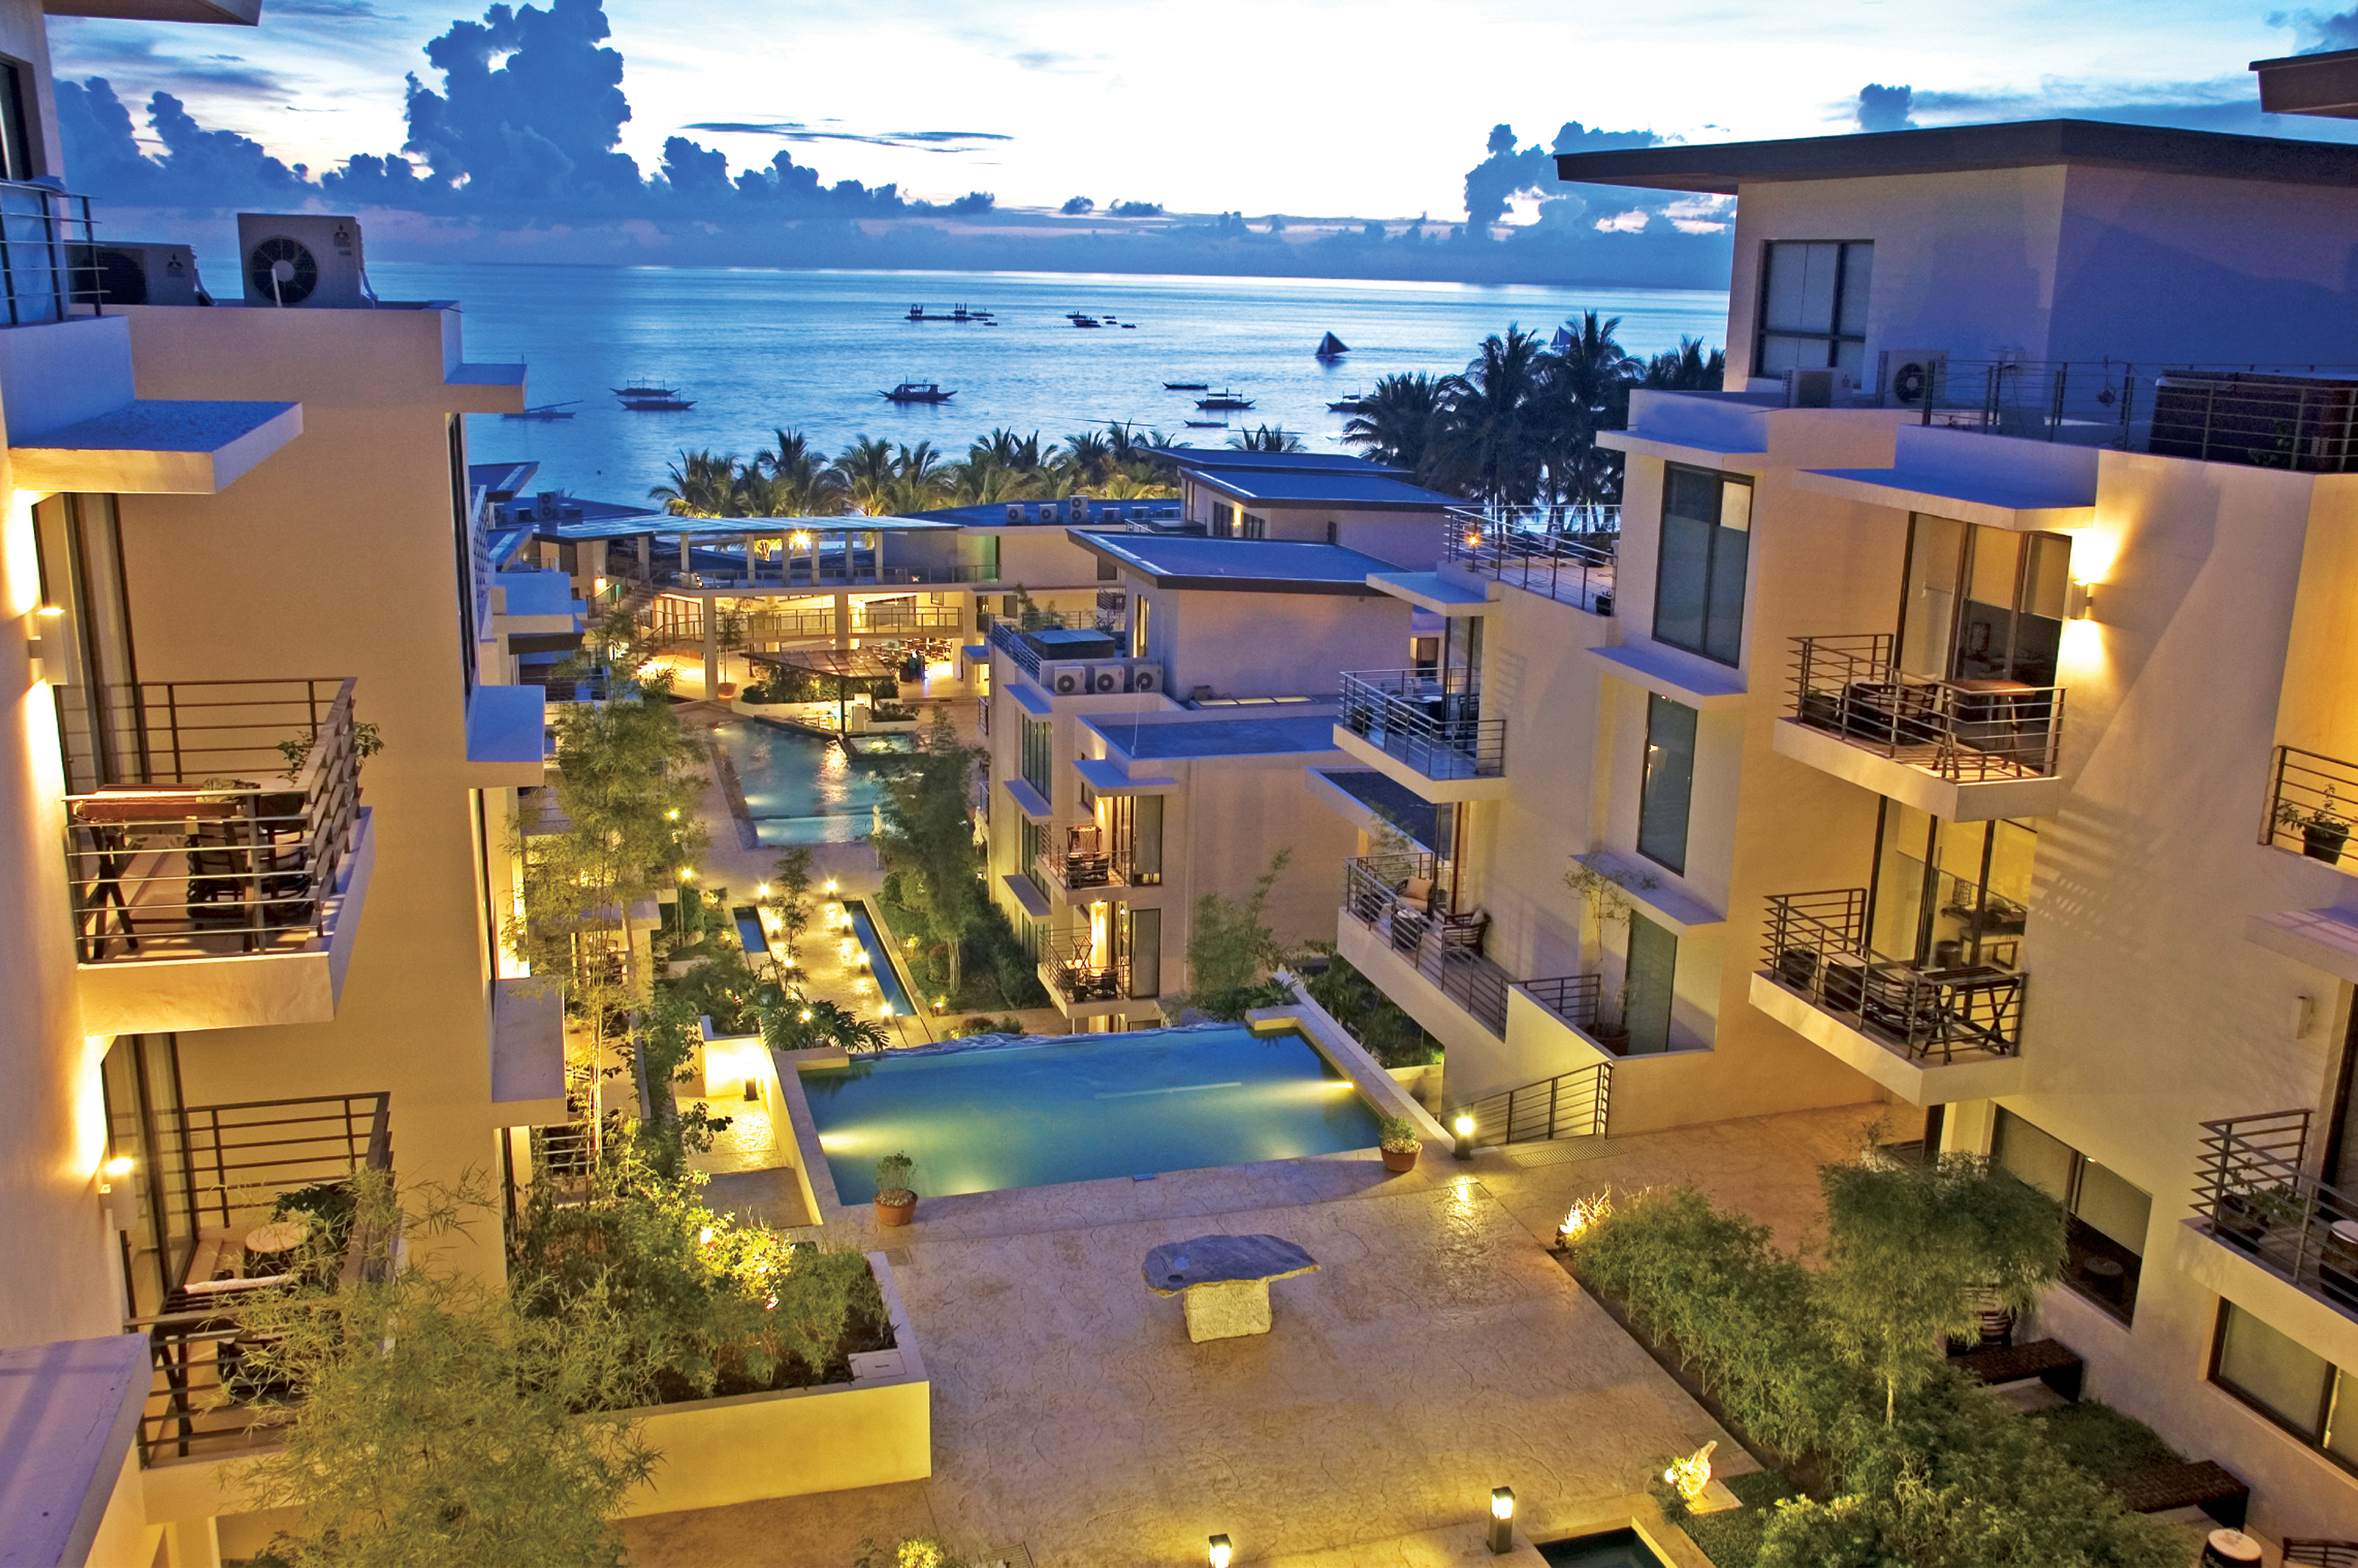 Boracay Luxury Resort Hotel | Discovery Shores Boracay Island Philippines